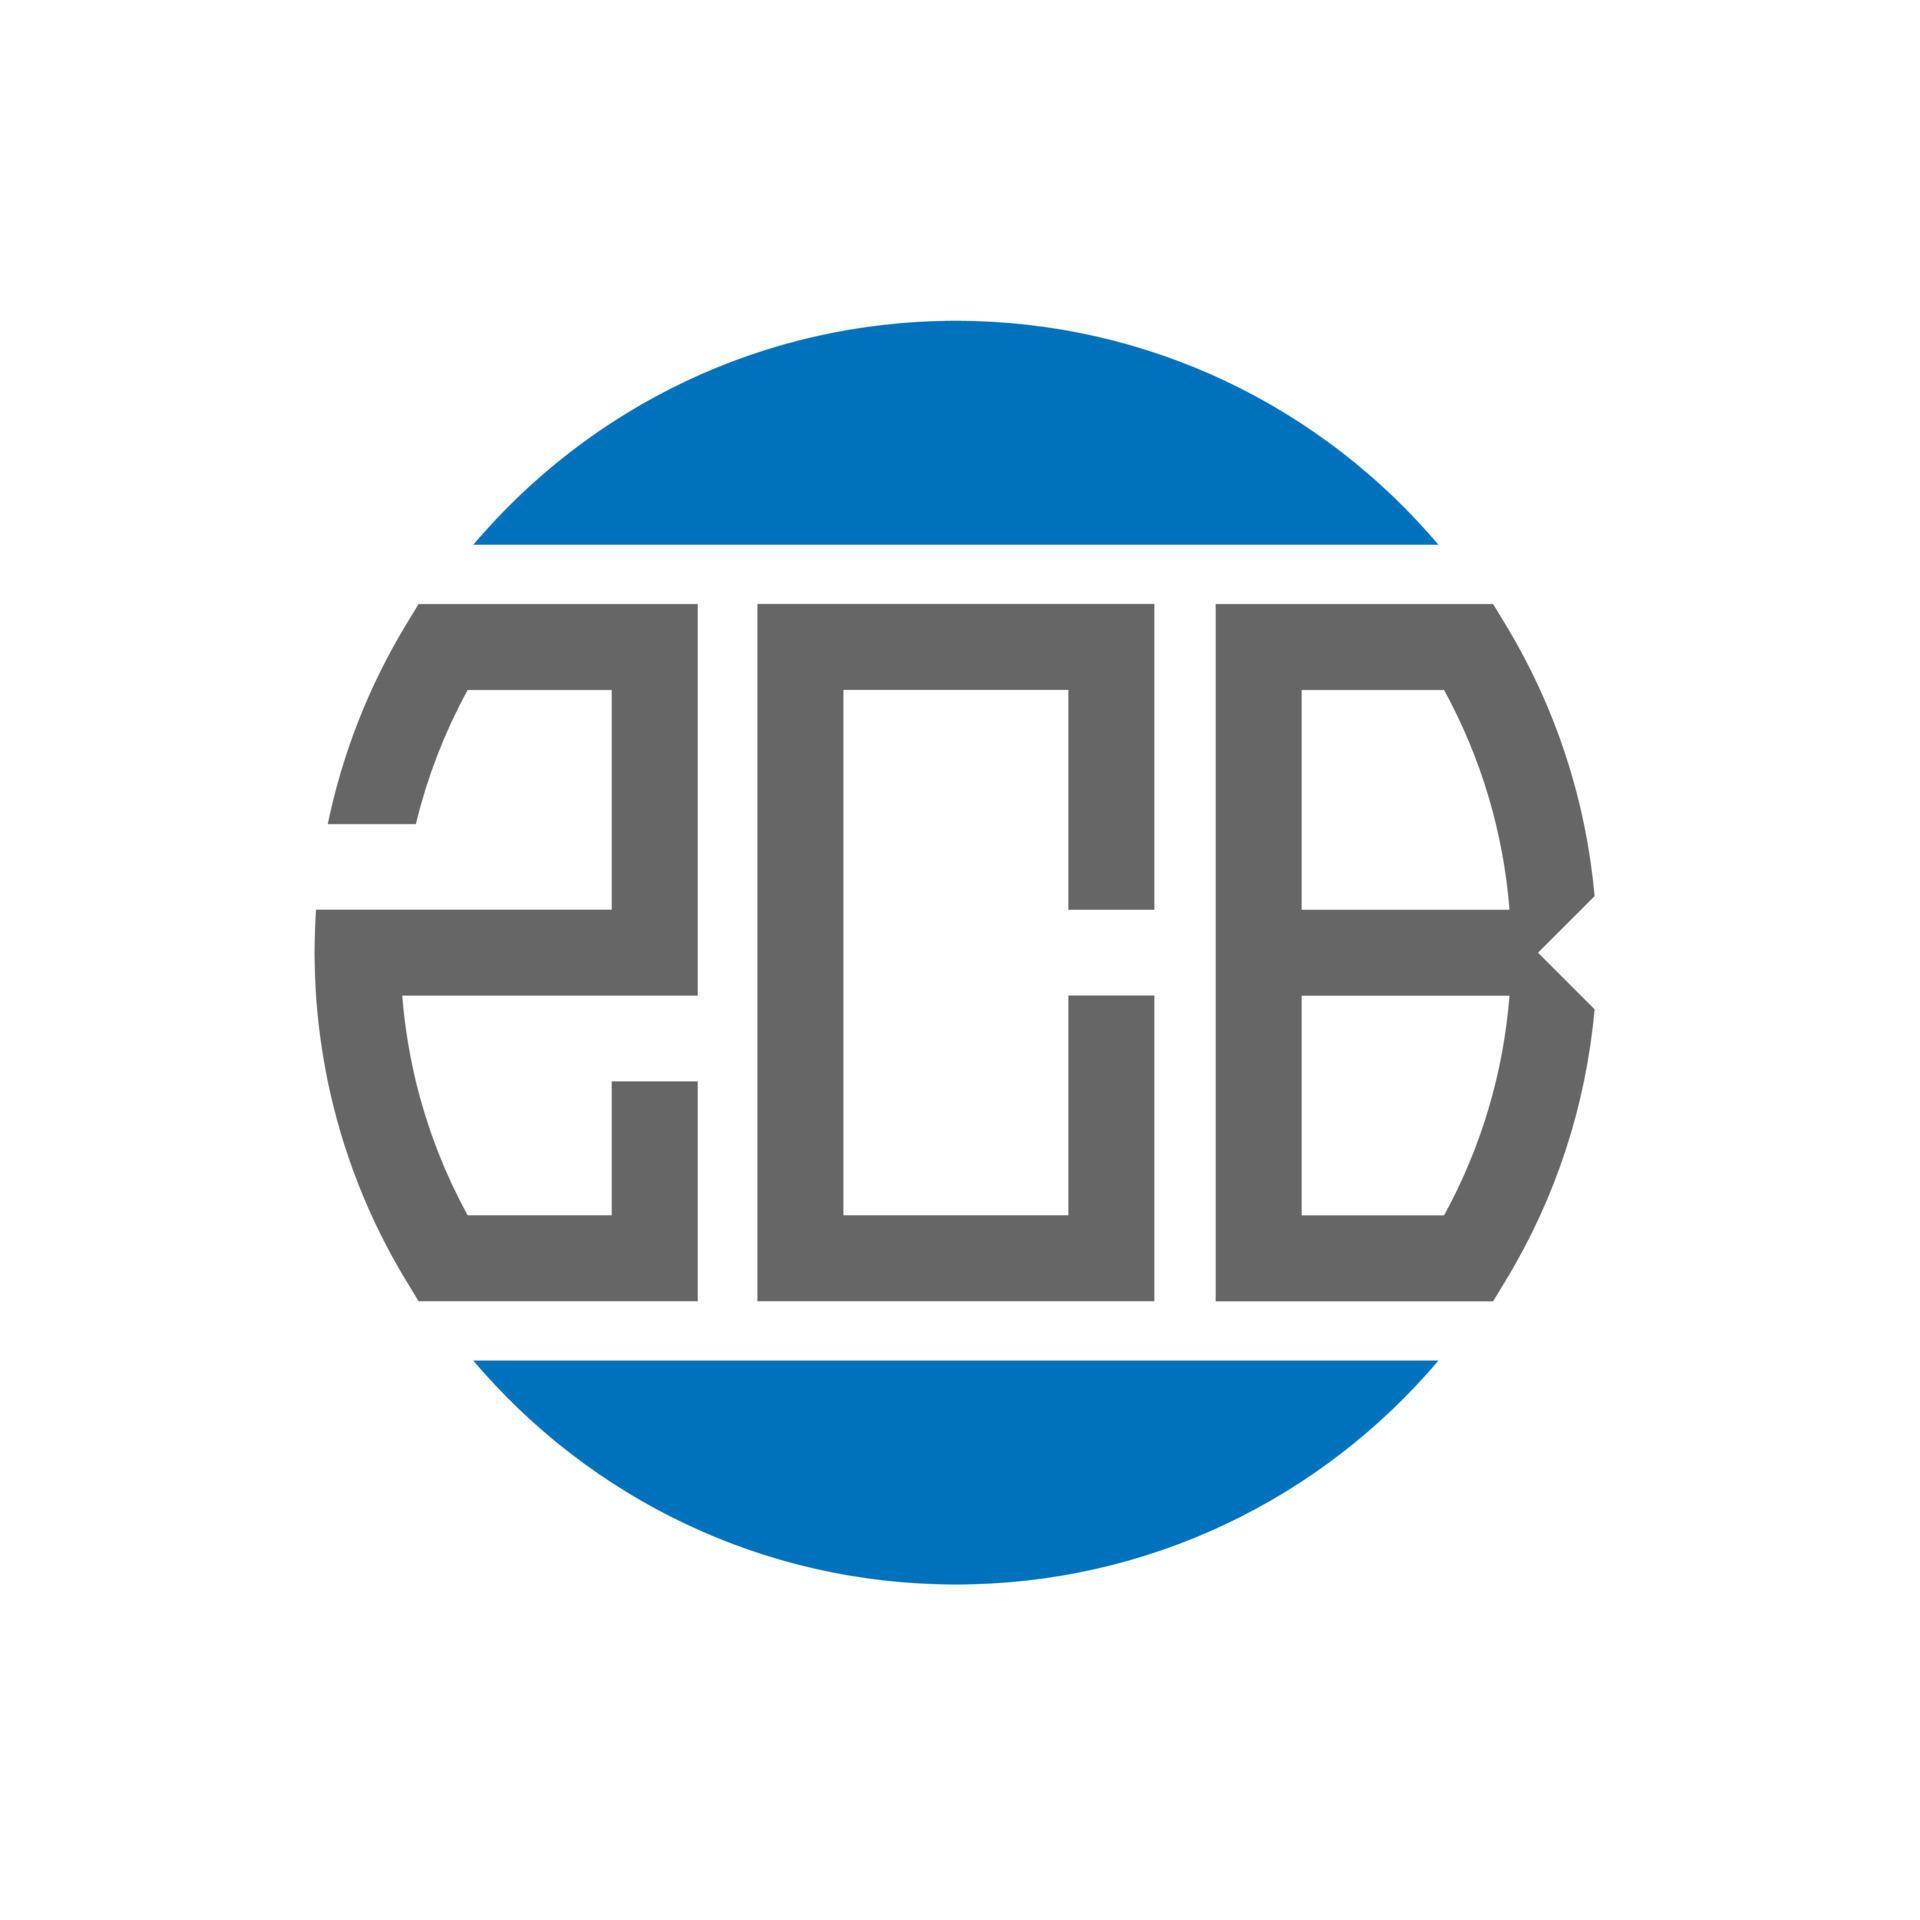 ZCB letter logo design on white background. ZCB creative initials .